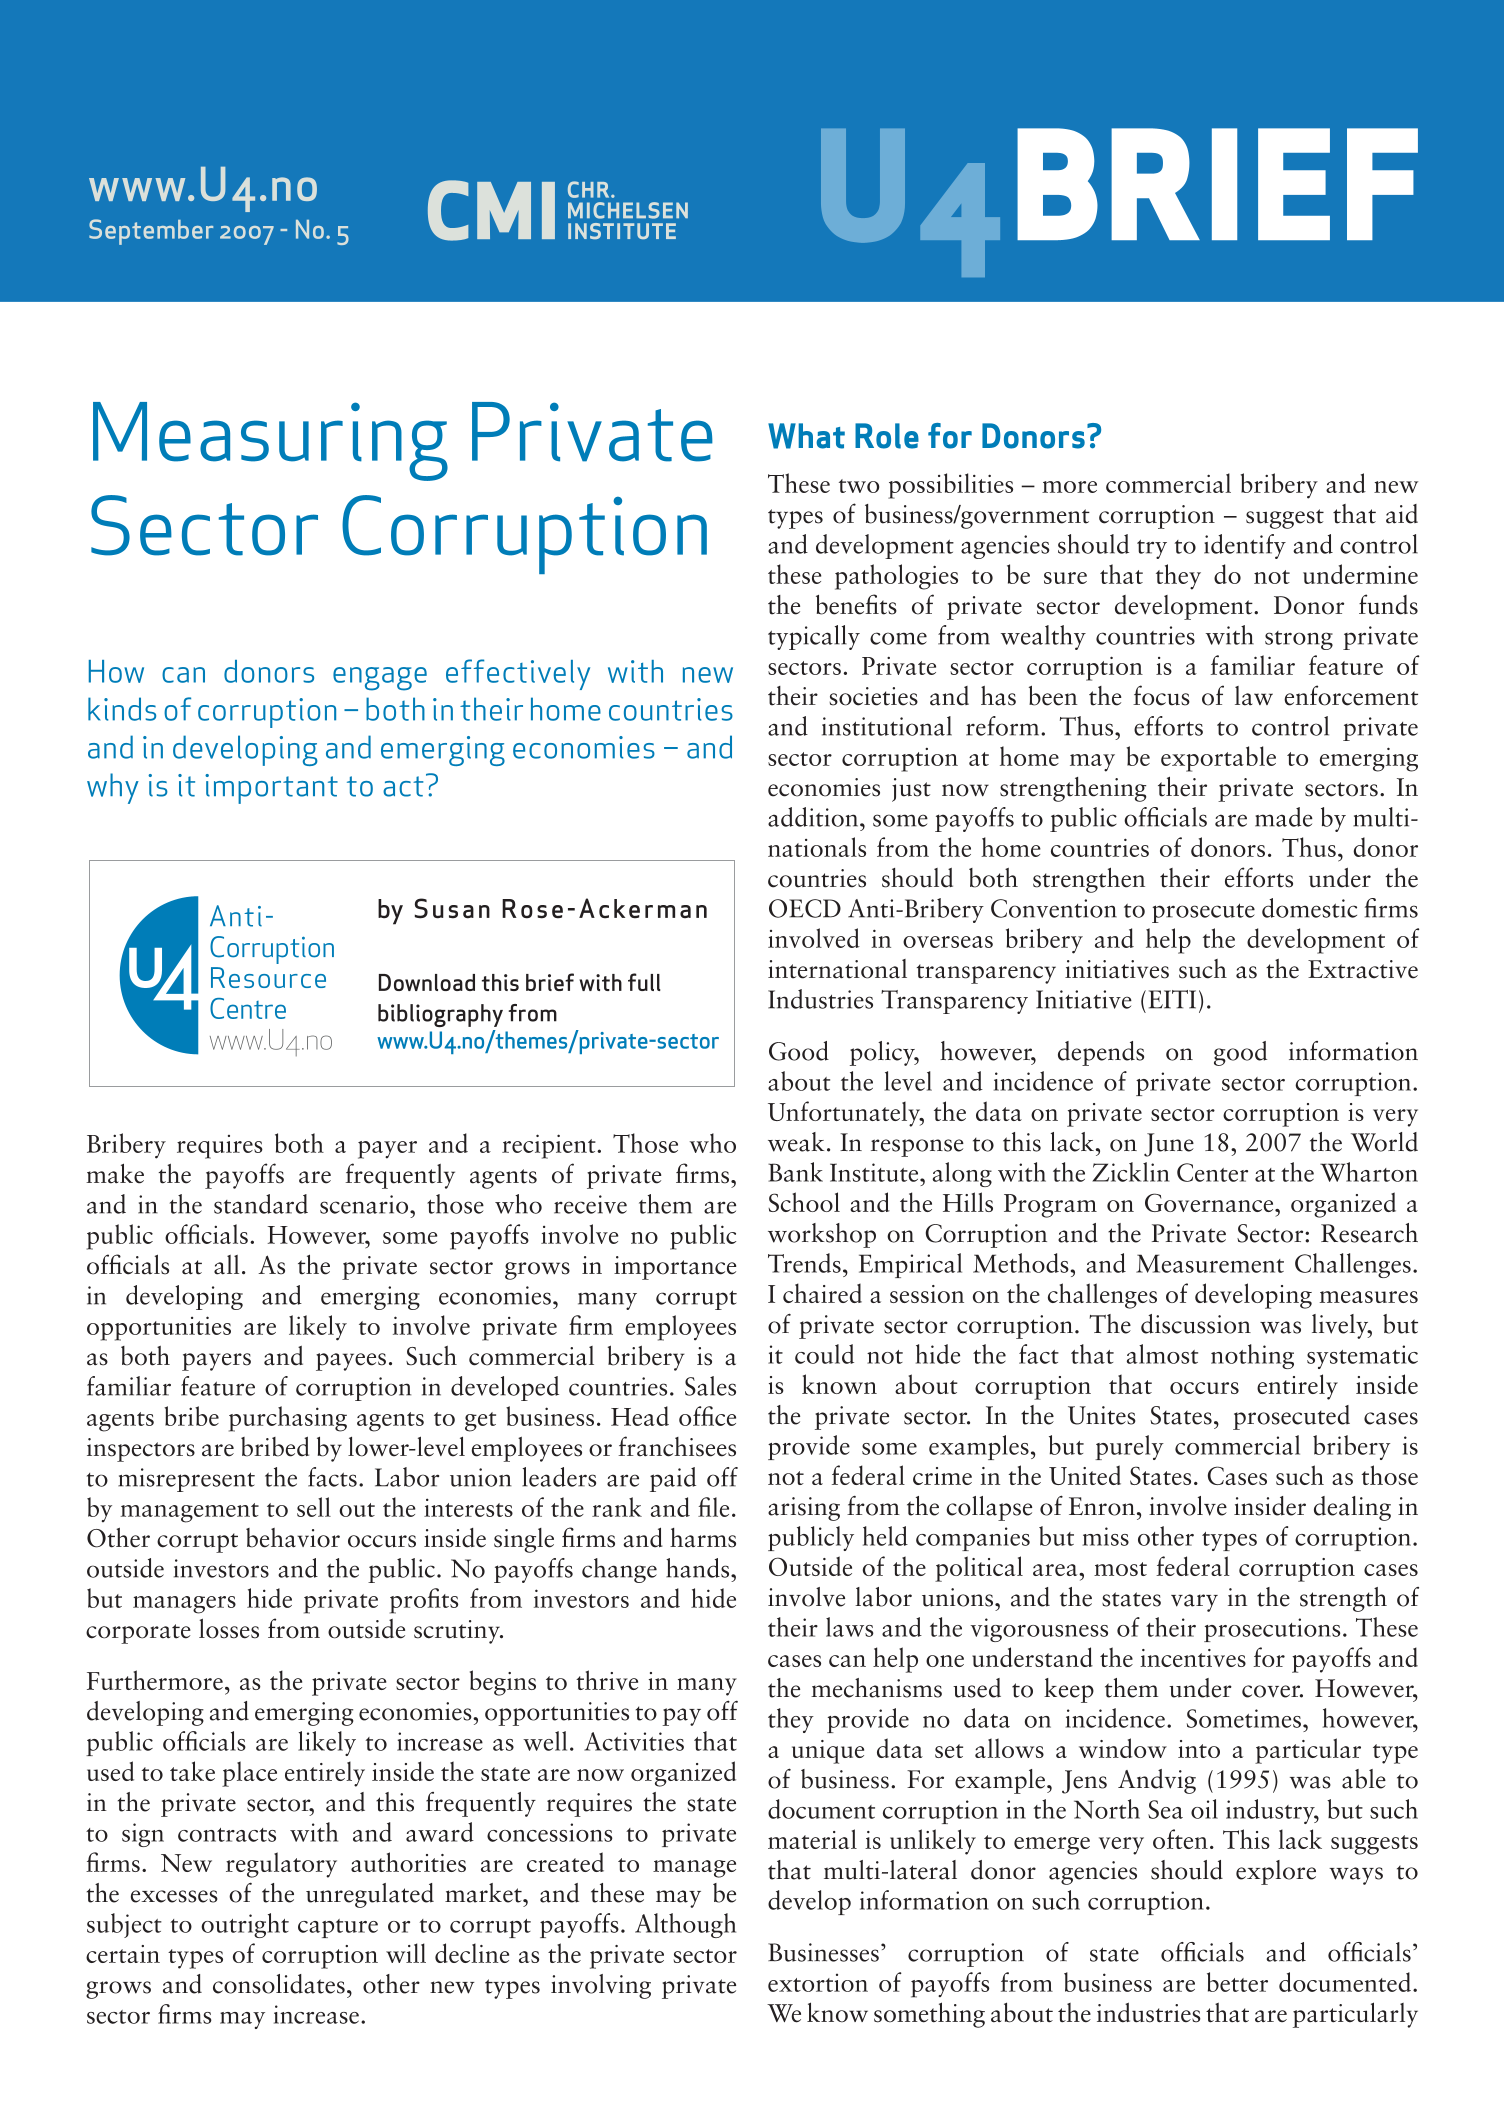 Measuring private sector corruption